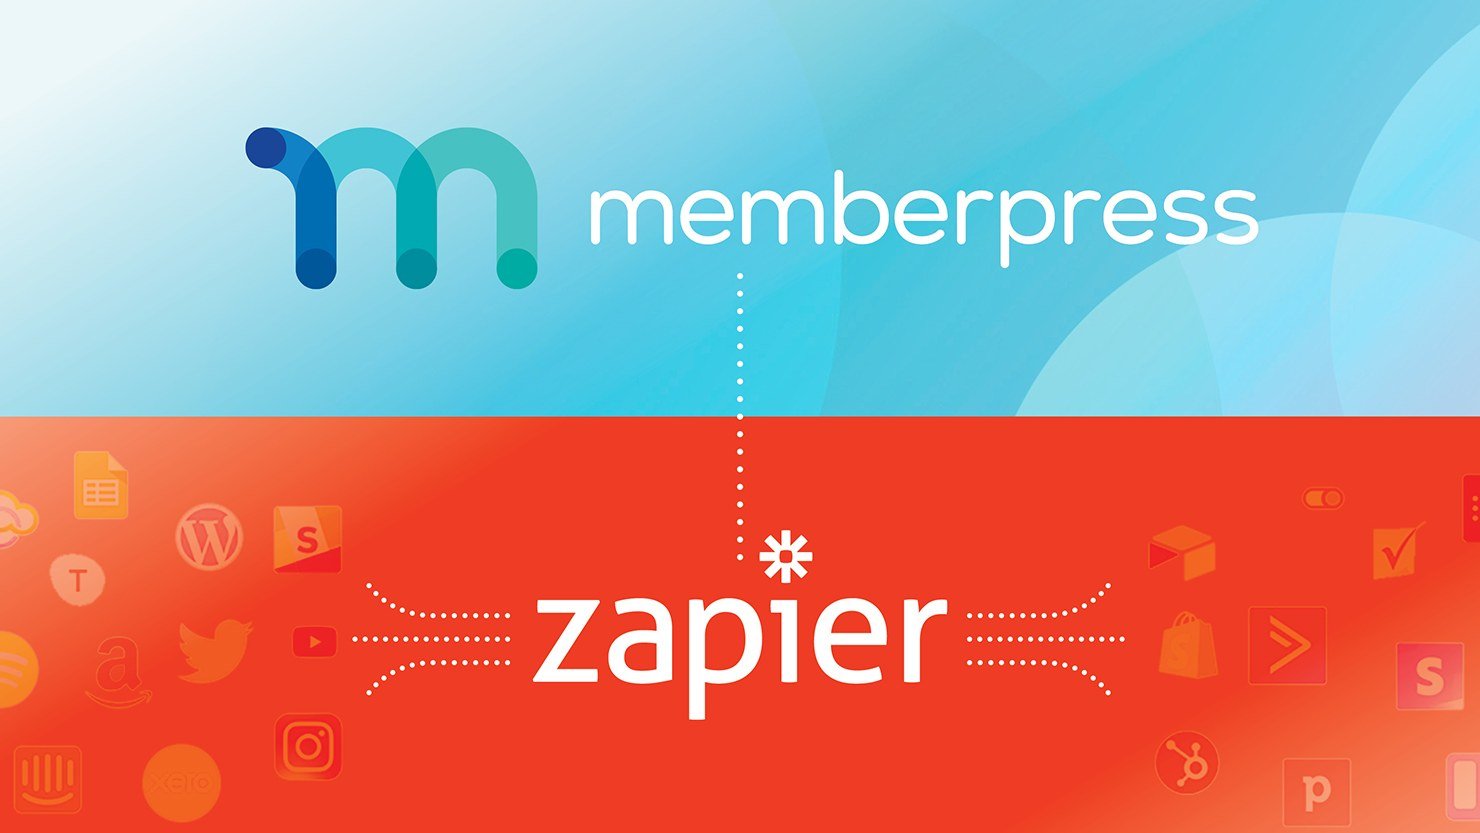 memberpress and zapier